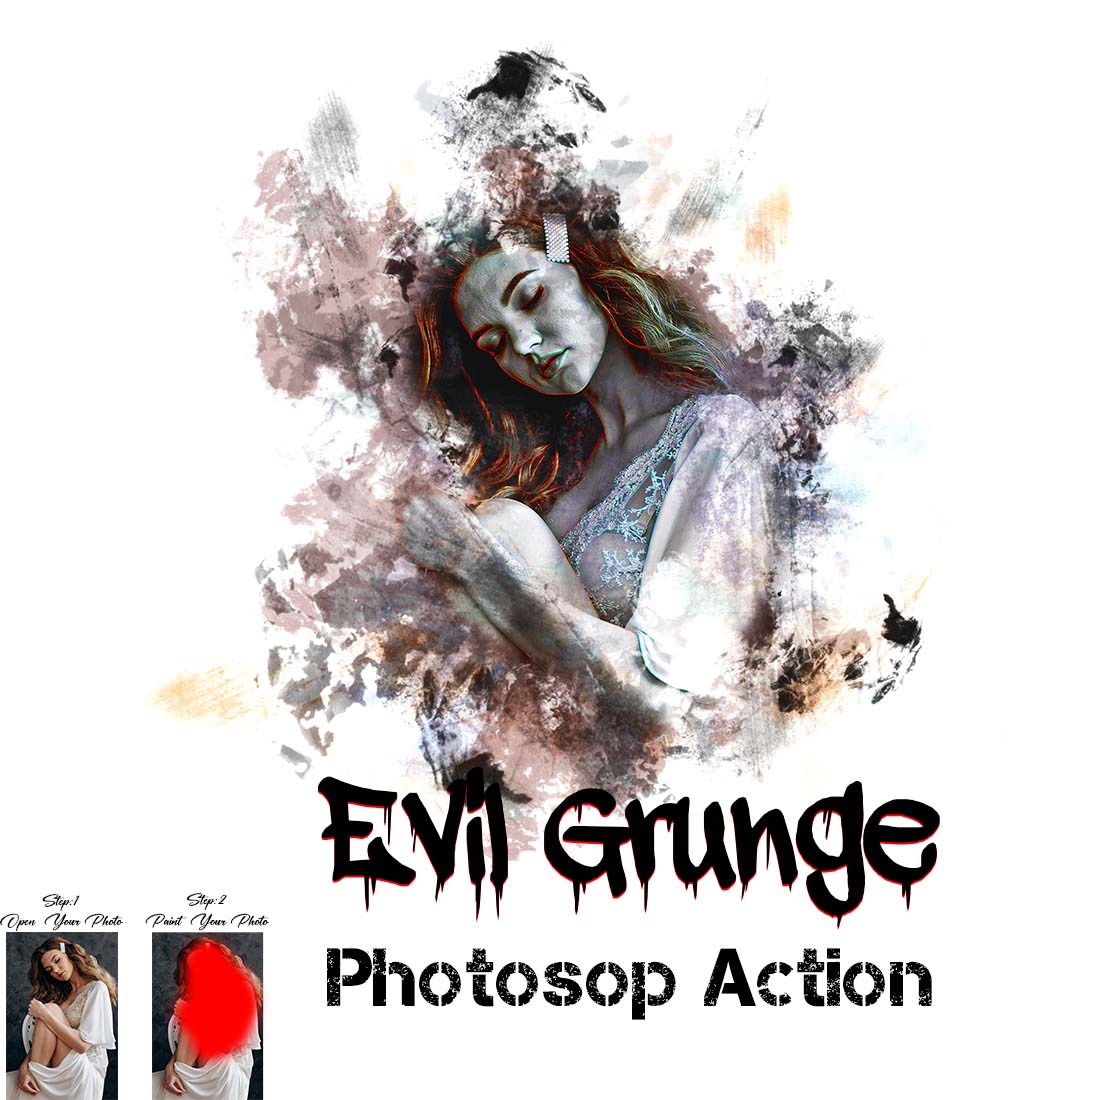 Evil Grunge Photoshop Action cover image.